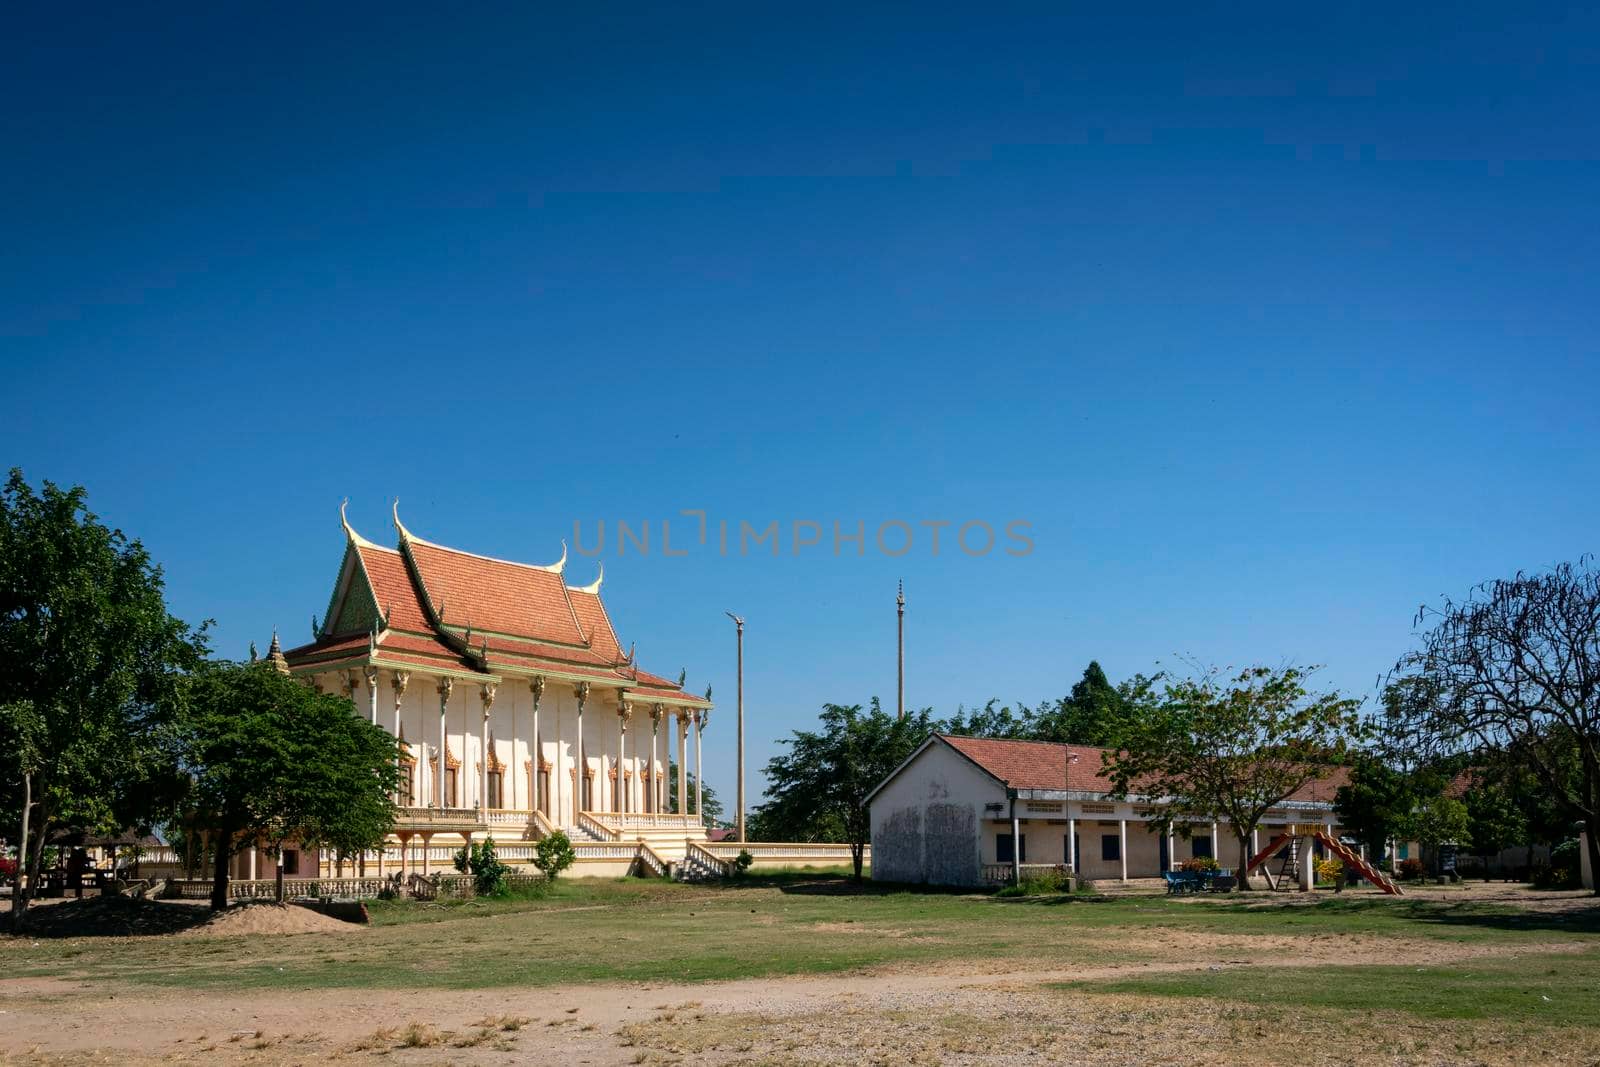 Wat Svay Andet Pagoda Kandal province near Phnom Penh Cambodia by jackmalipan